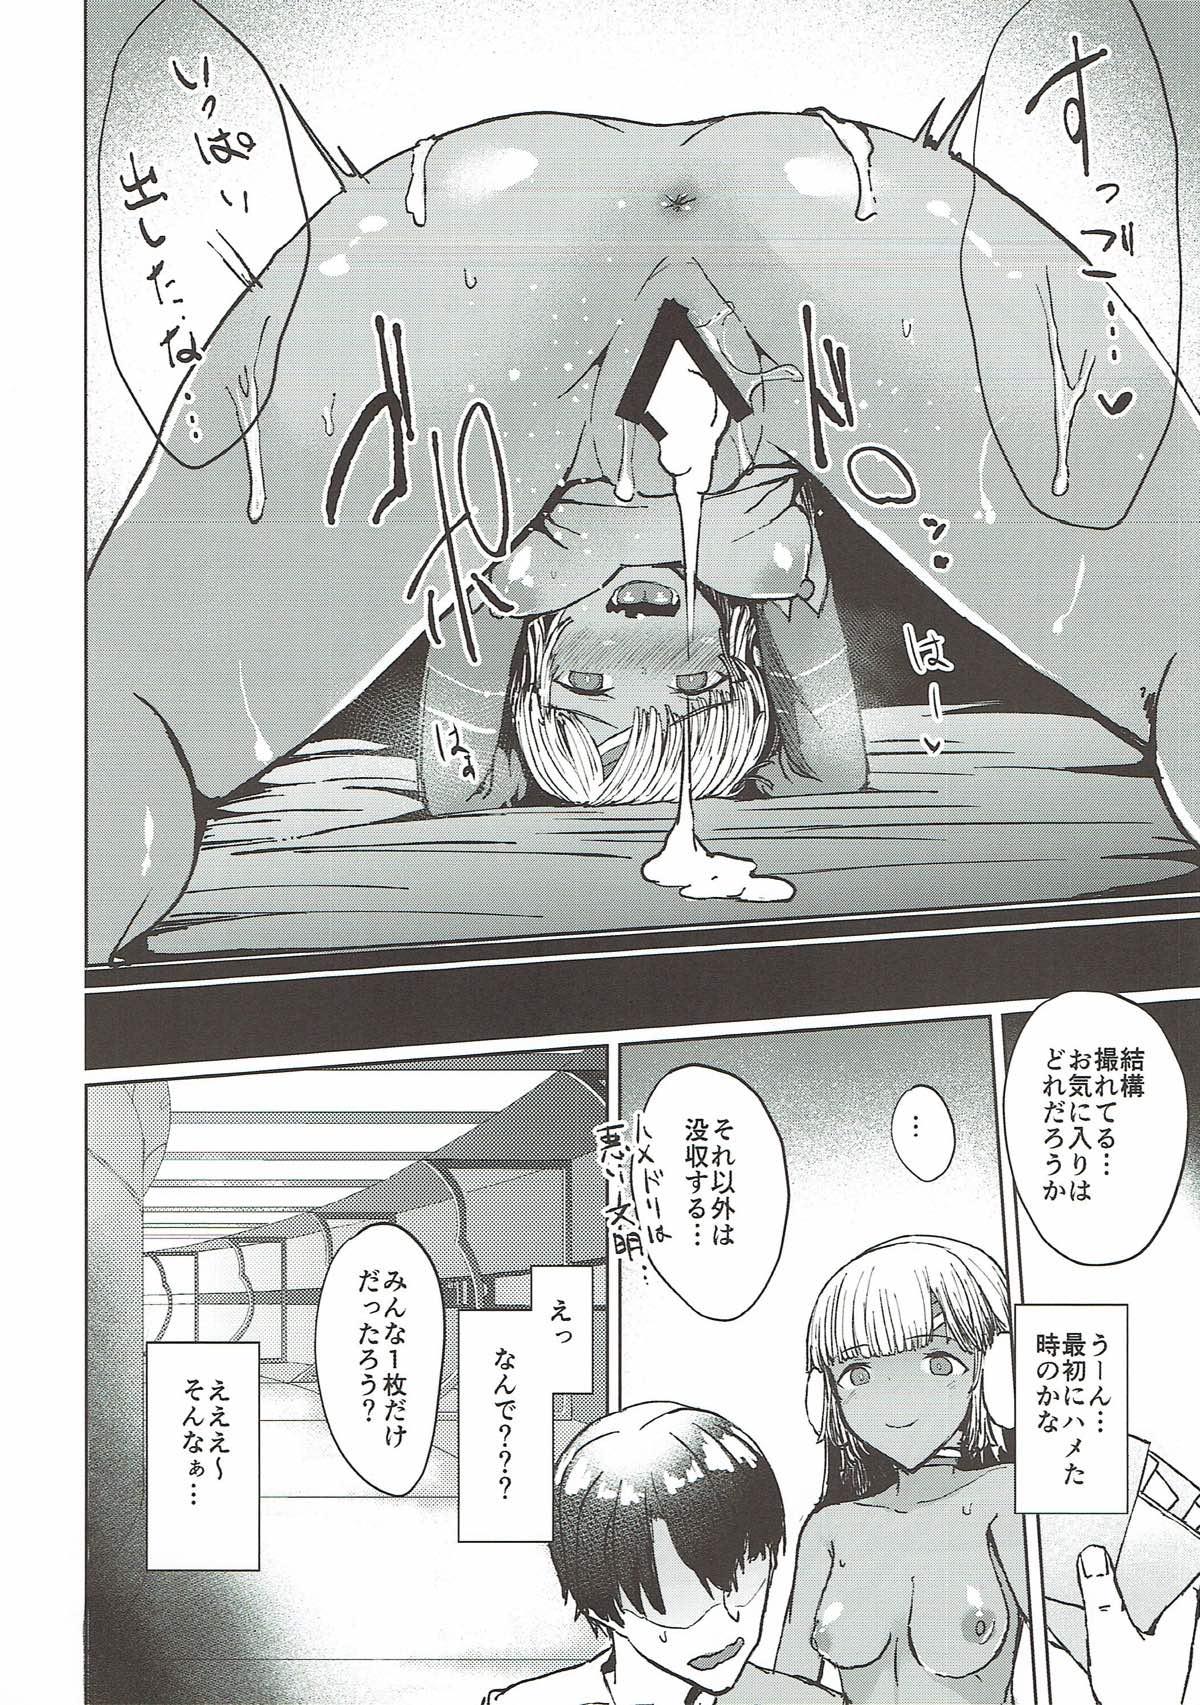 Bus Present Hoshii Mono ga nai? Kore Igai... Naraba Shikata ga Nai - Fate grand order Piss - Page 11